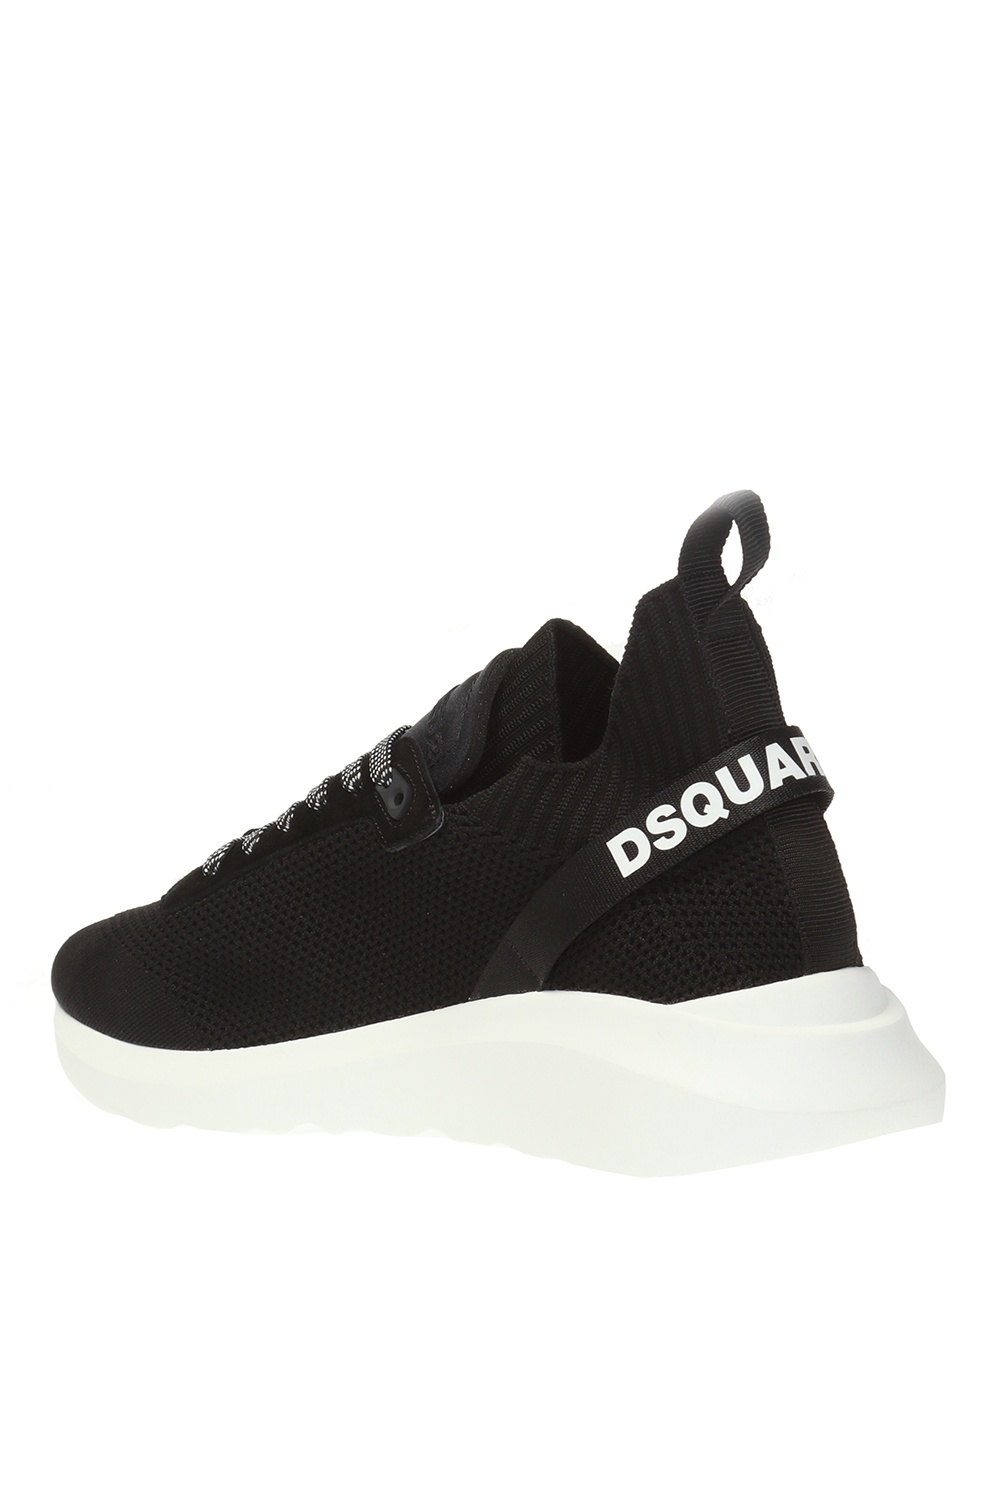 Dsquared2 ‘Speedster’ sneakers